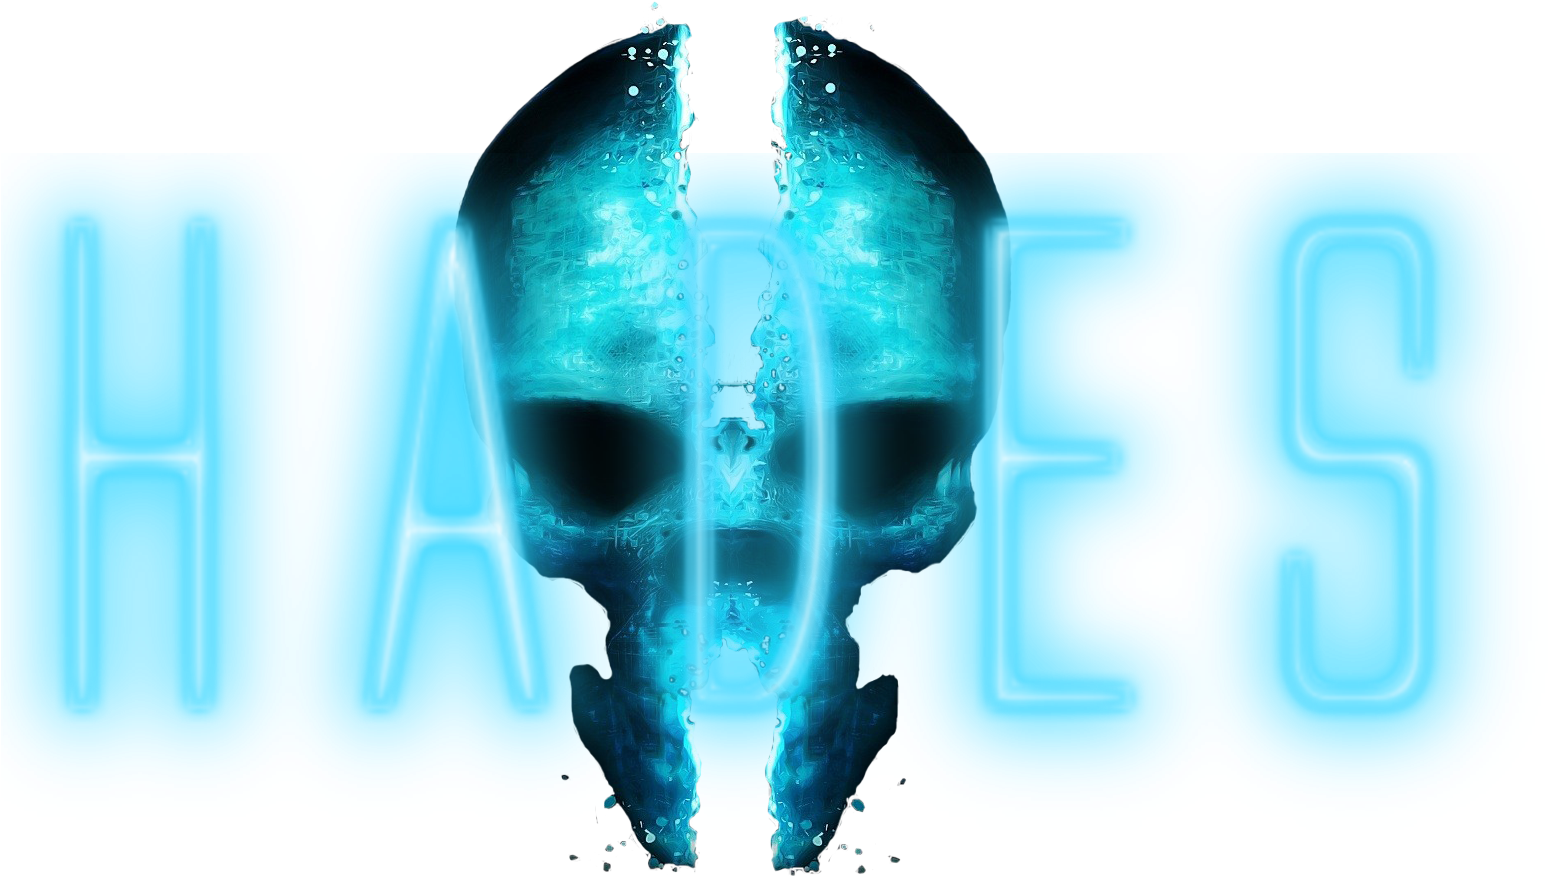 Hades Game Logo Water Effect PNG image